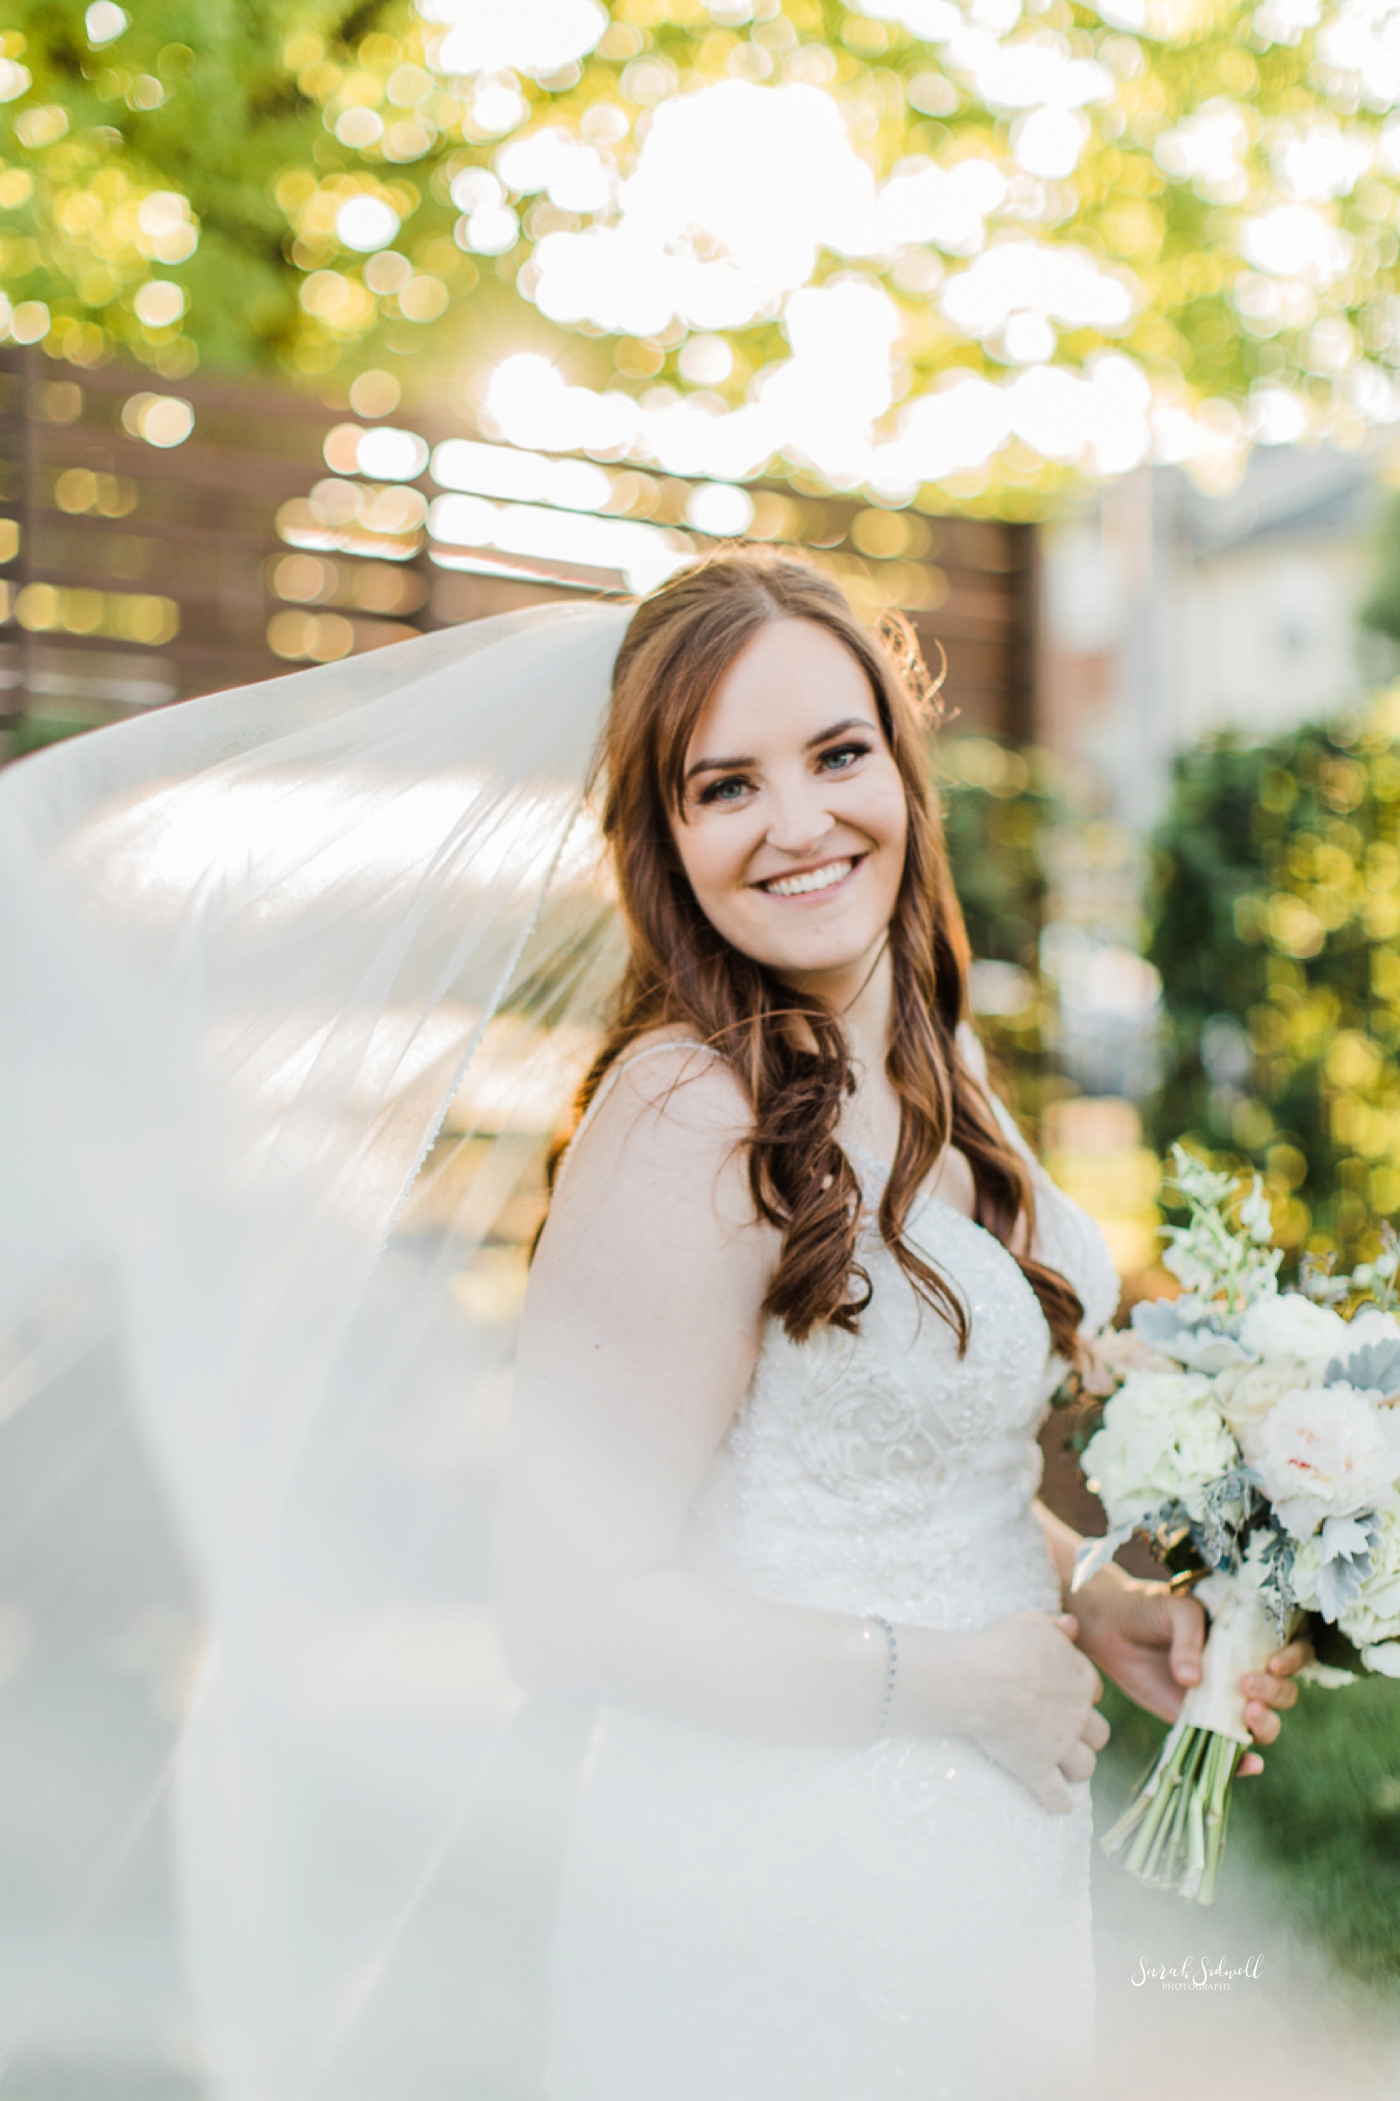 A bride's veil flows around her as she smiles. 